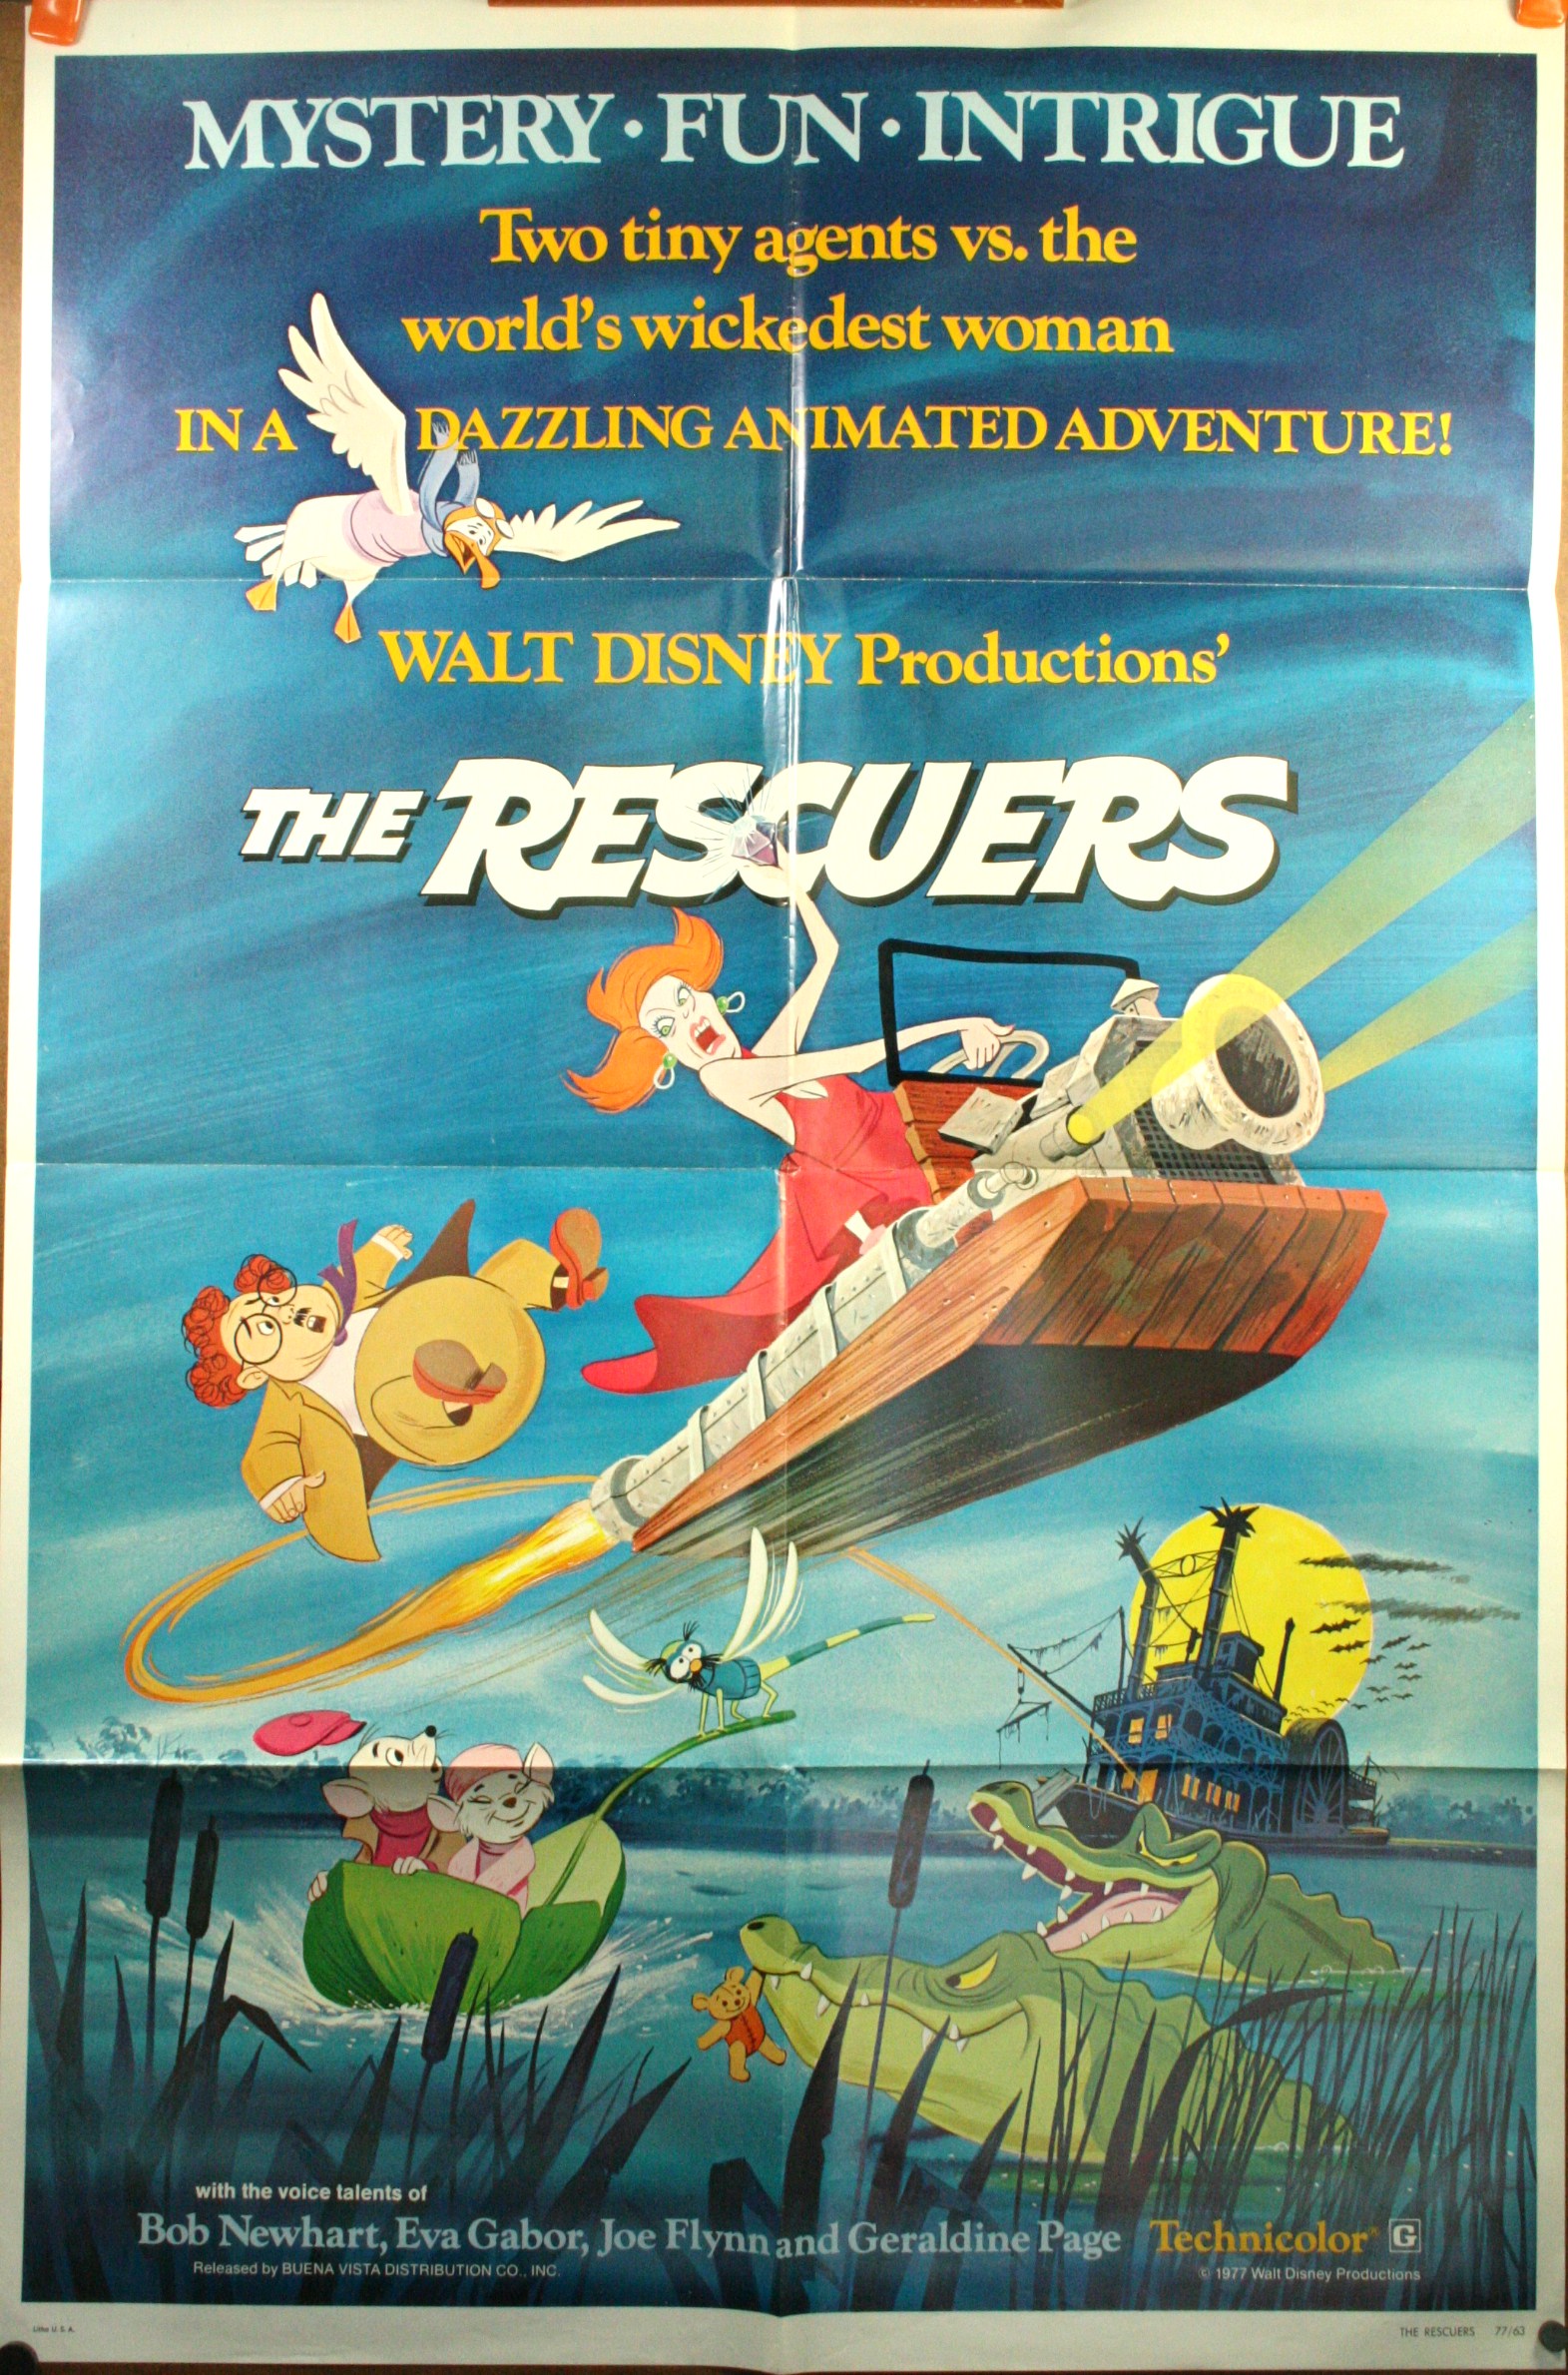 THE RESCUERS, Bob Newhart Eva Gabor Animation Original Vintage Movie Poster  – Original Vintage Movie Posters